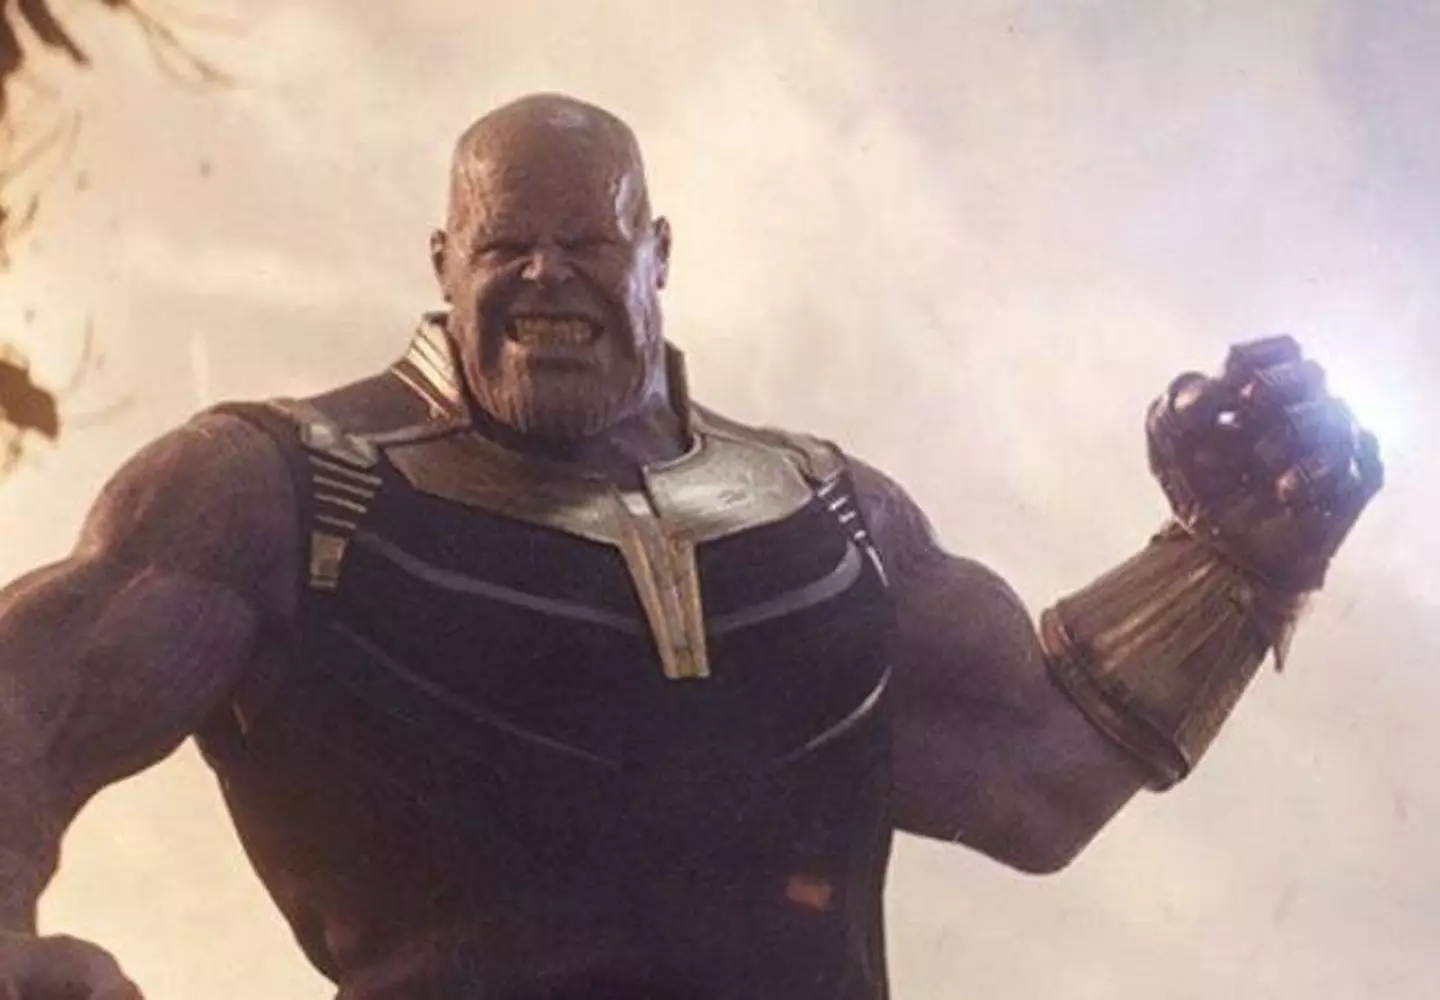 Josh Brolin portrayed Thanos in the Avengers films.